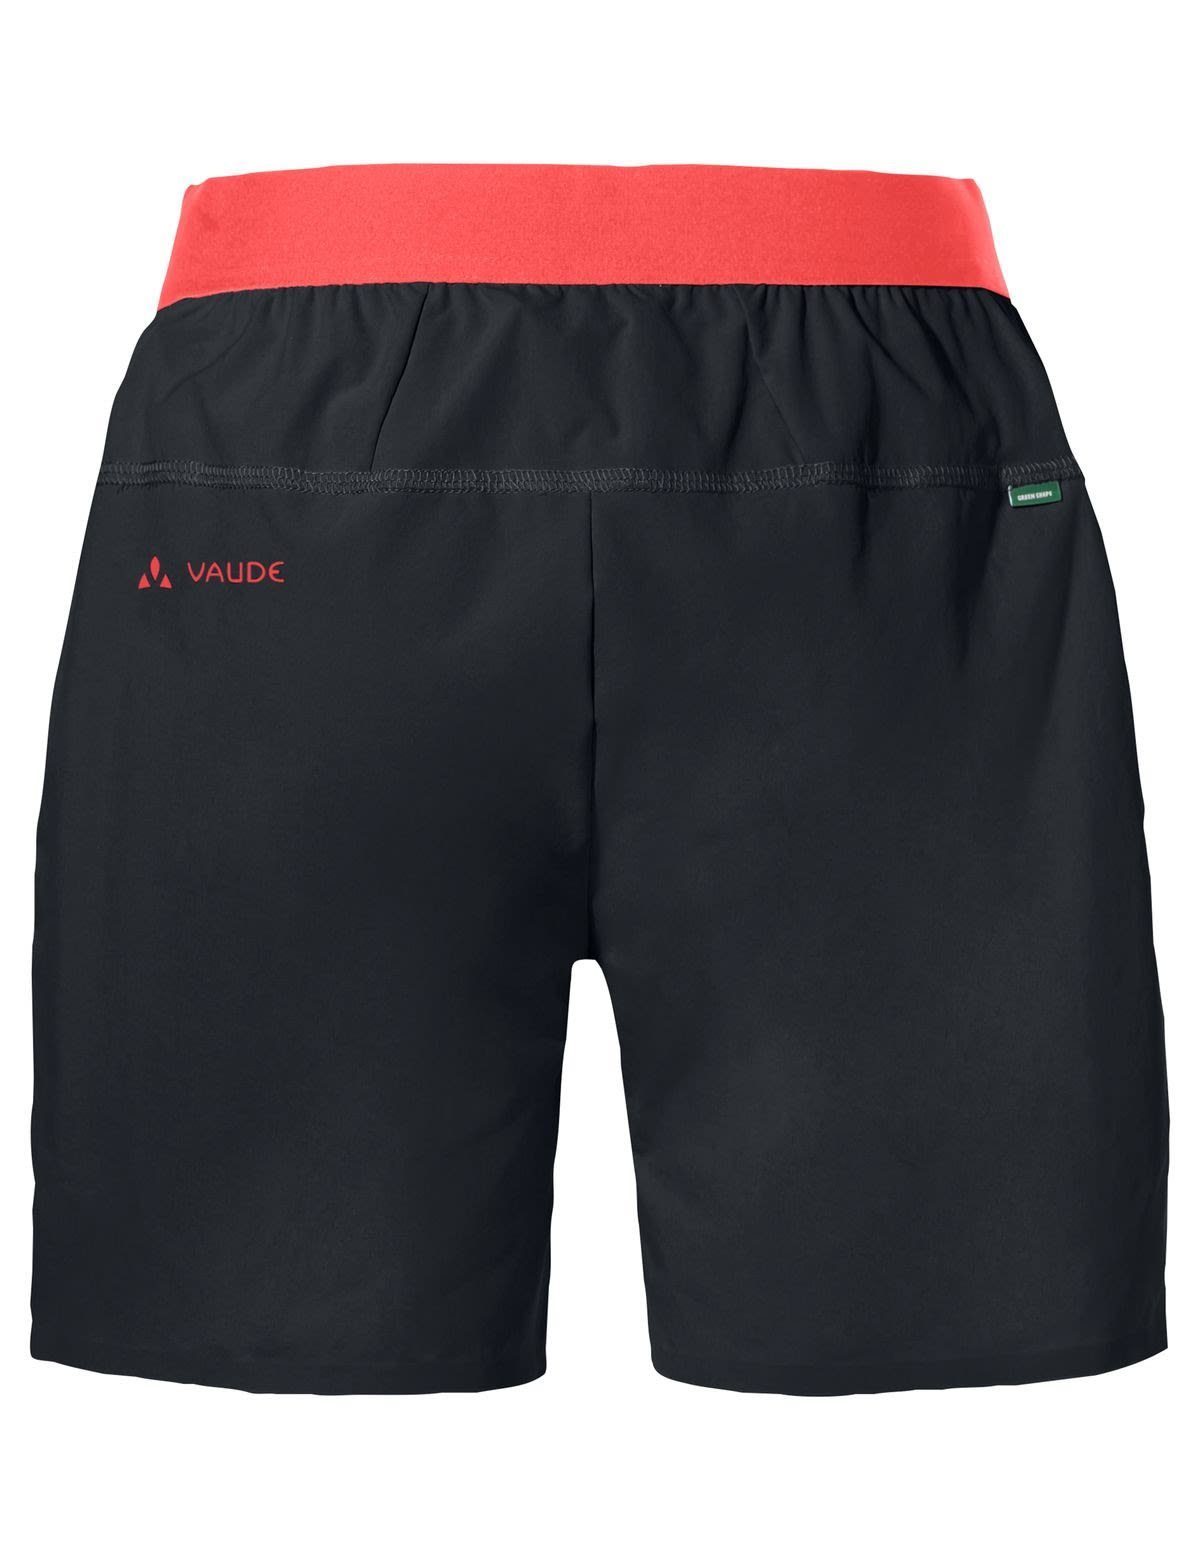 Shorts Womens Vaude Scopi Lw Black Shorts Coral VAUDE Damen Strandshorts - Vibrant Ii